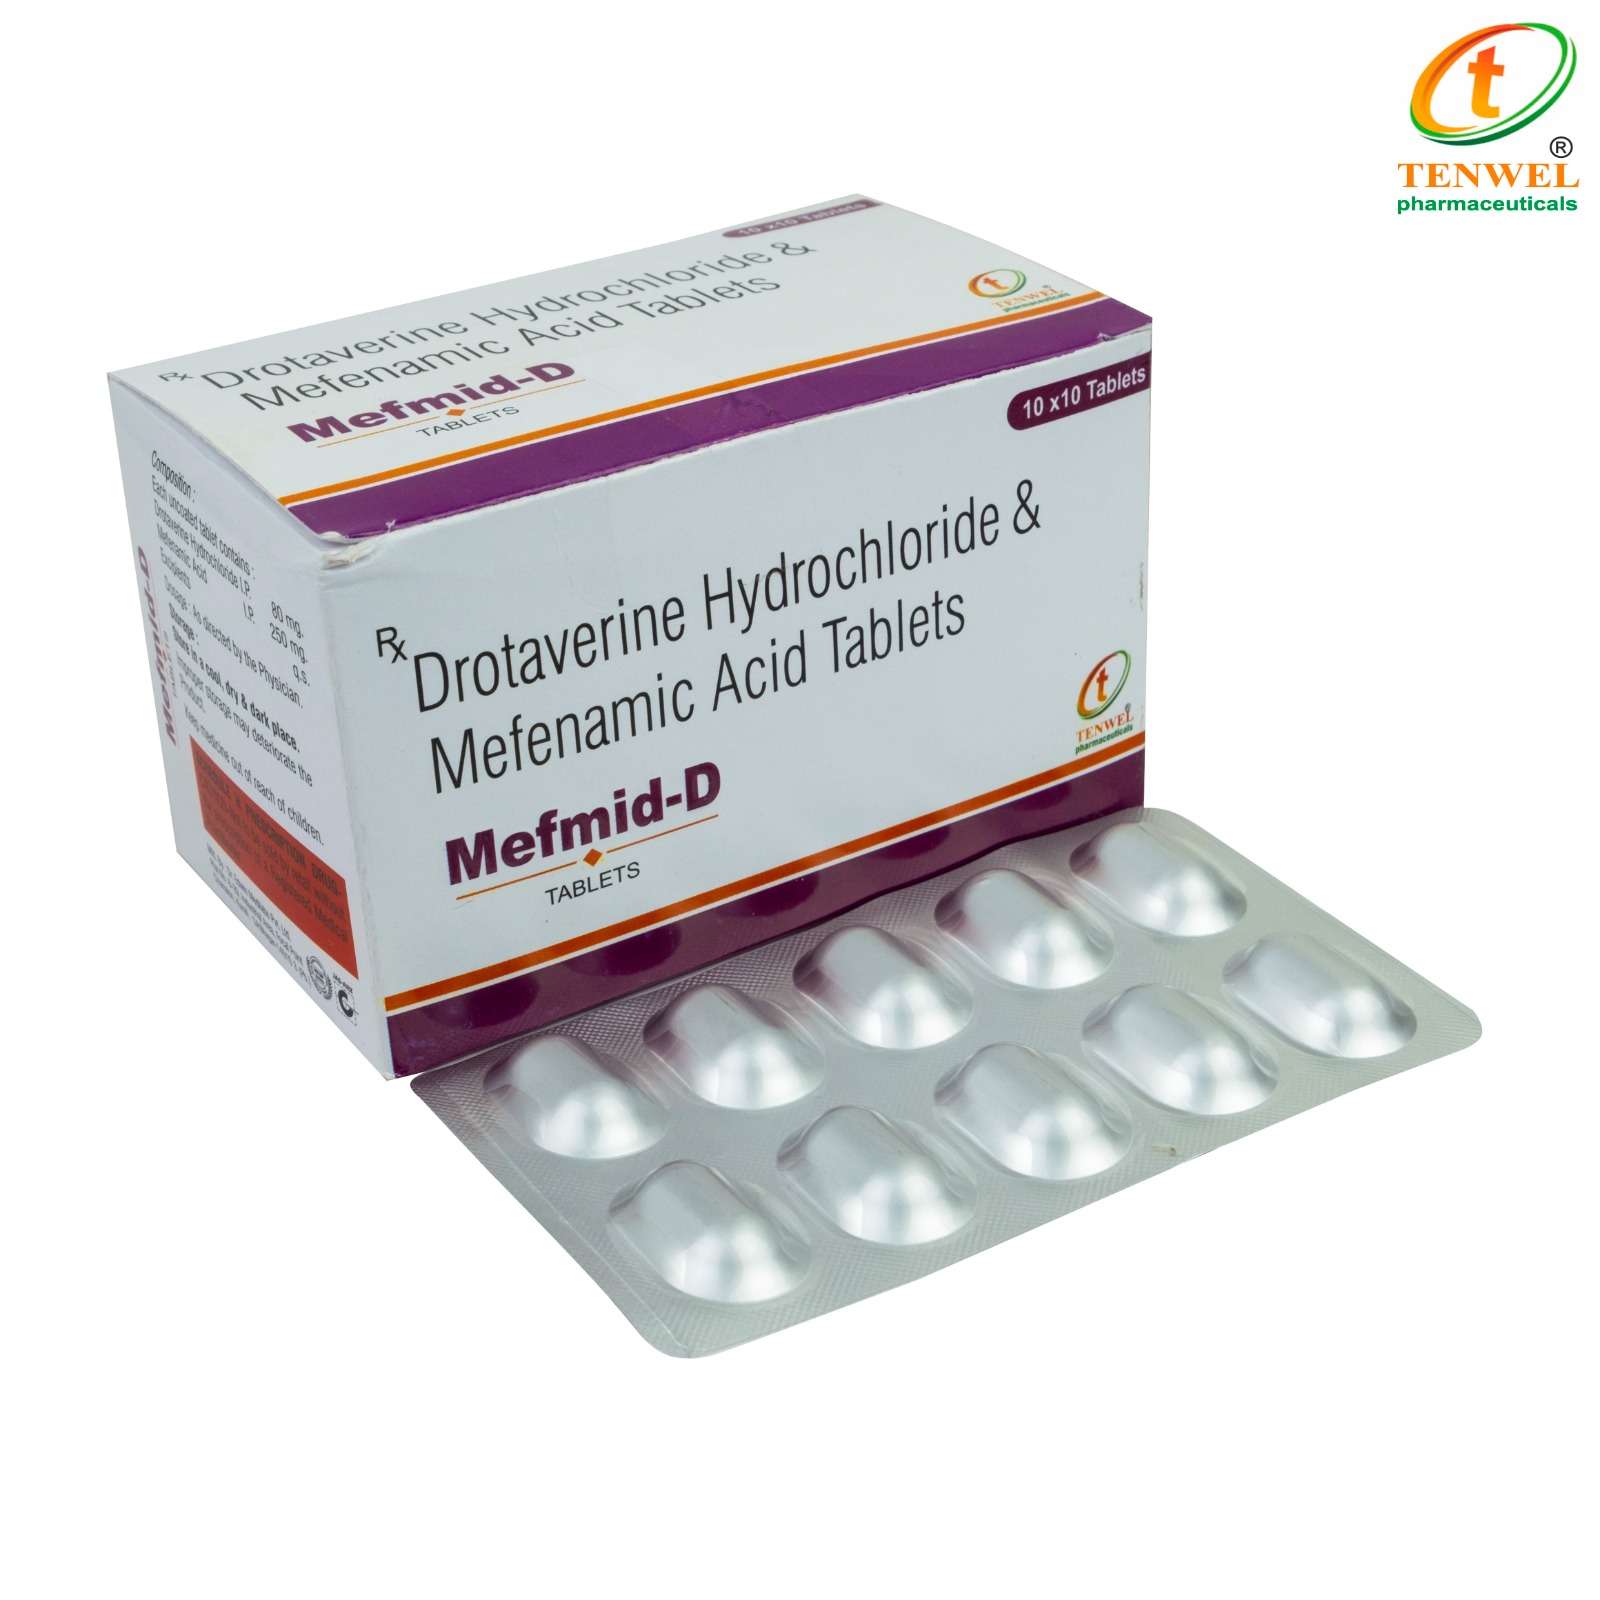 mefenamic acid 250mg + drotaverine hydrochloride 80mg